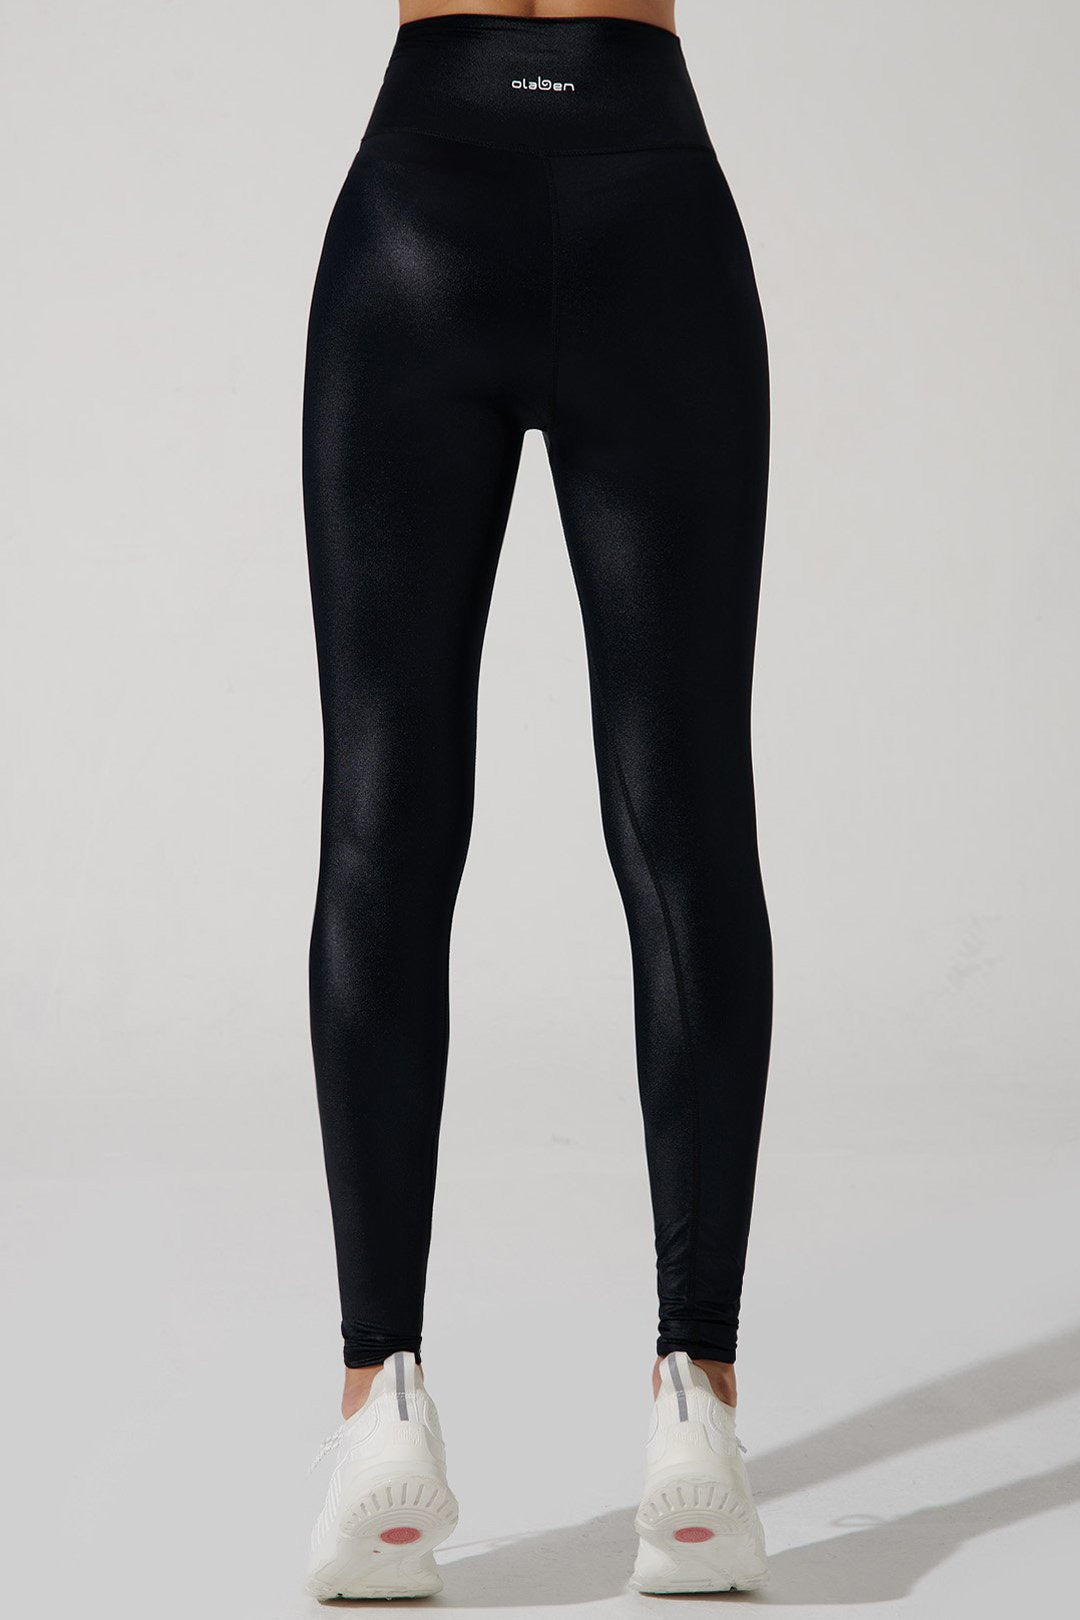 Liza Stylish Gym Wear With Side Pocket & Net Leggings | Stylish Bottom Wear  | Top Notch Design | Women Collection